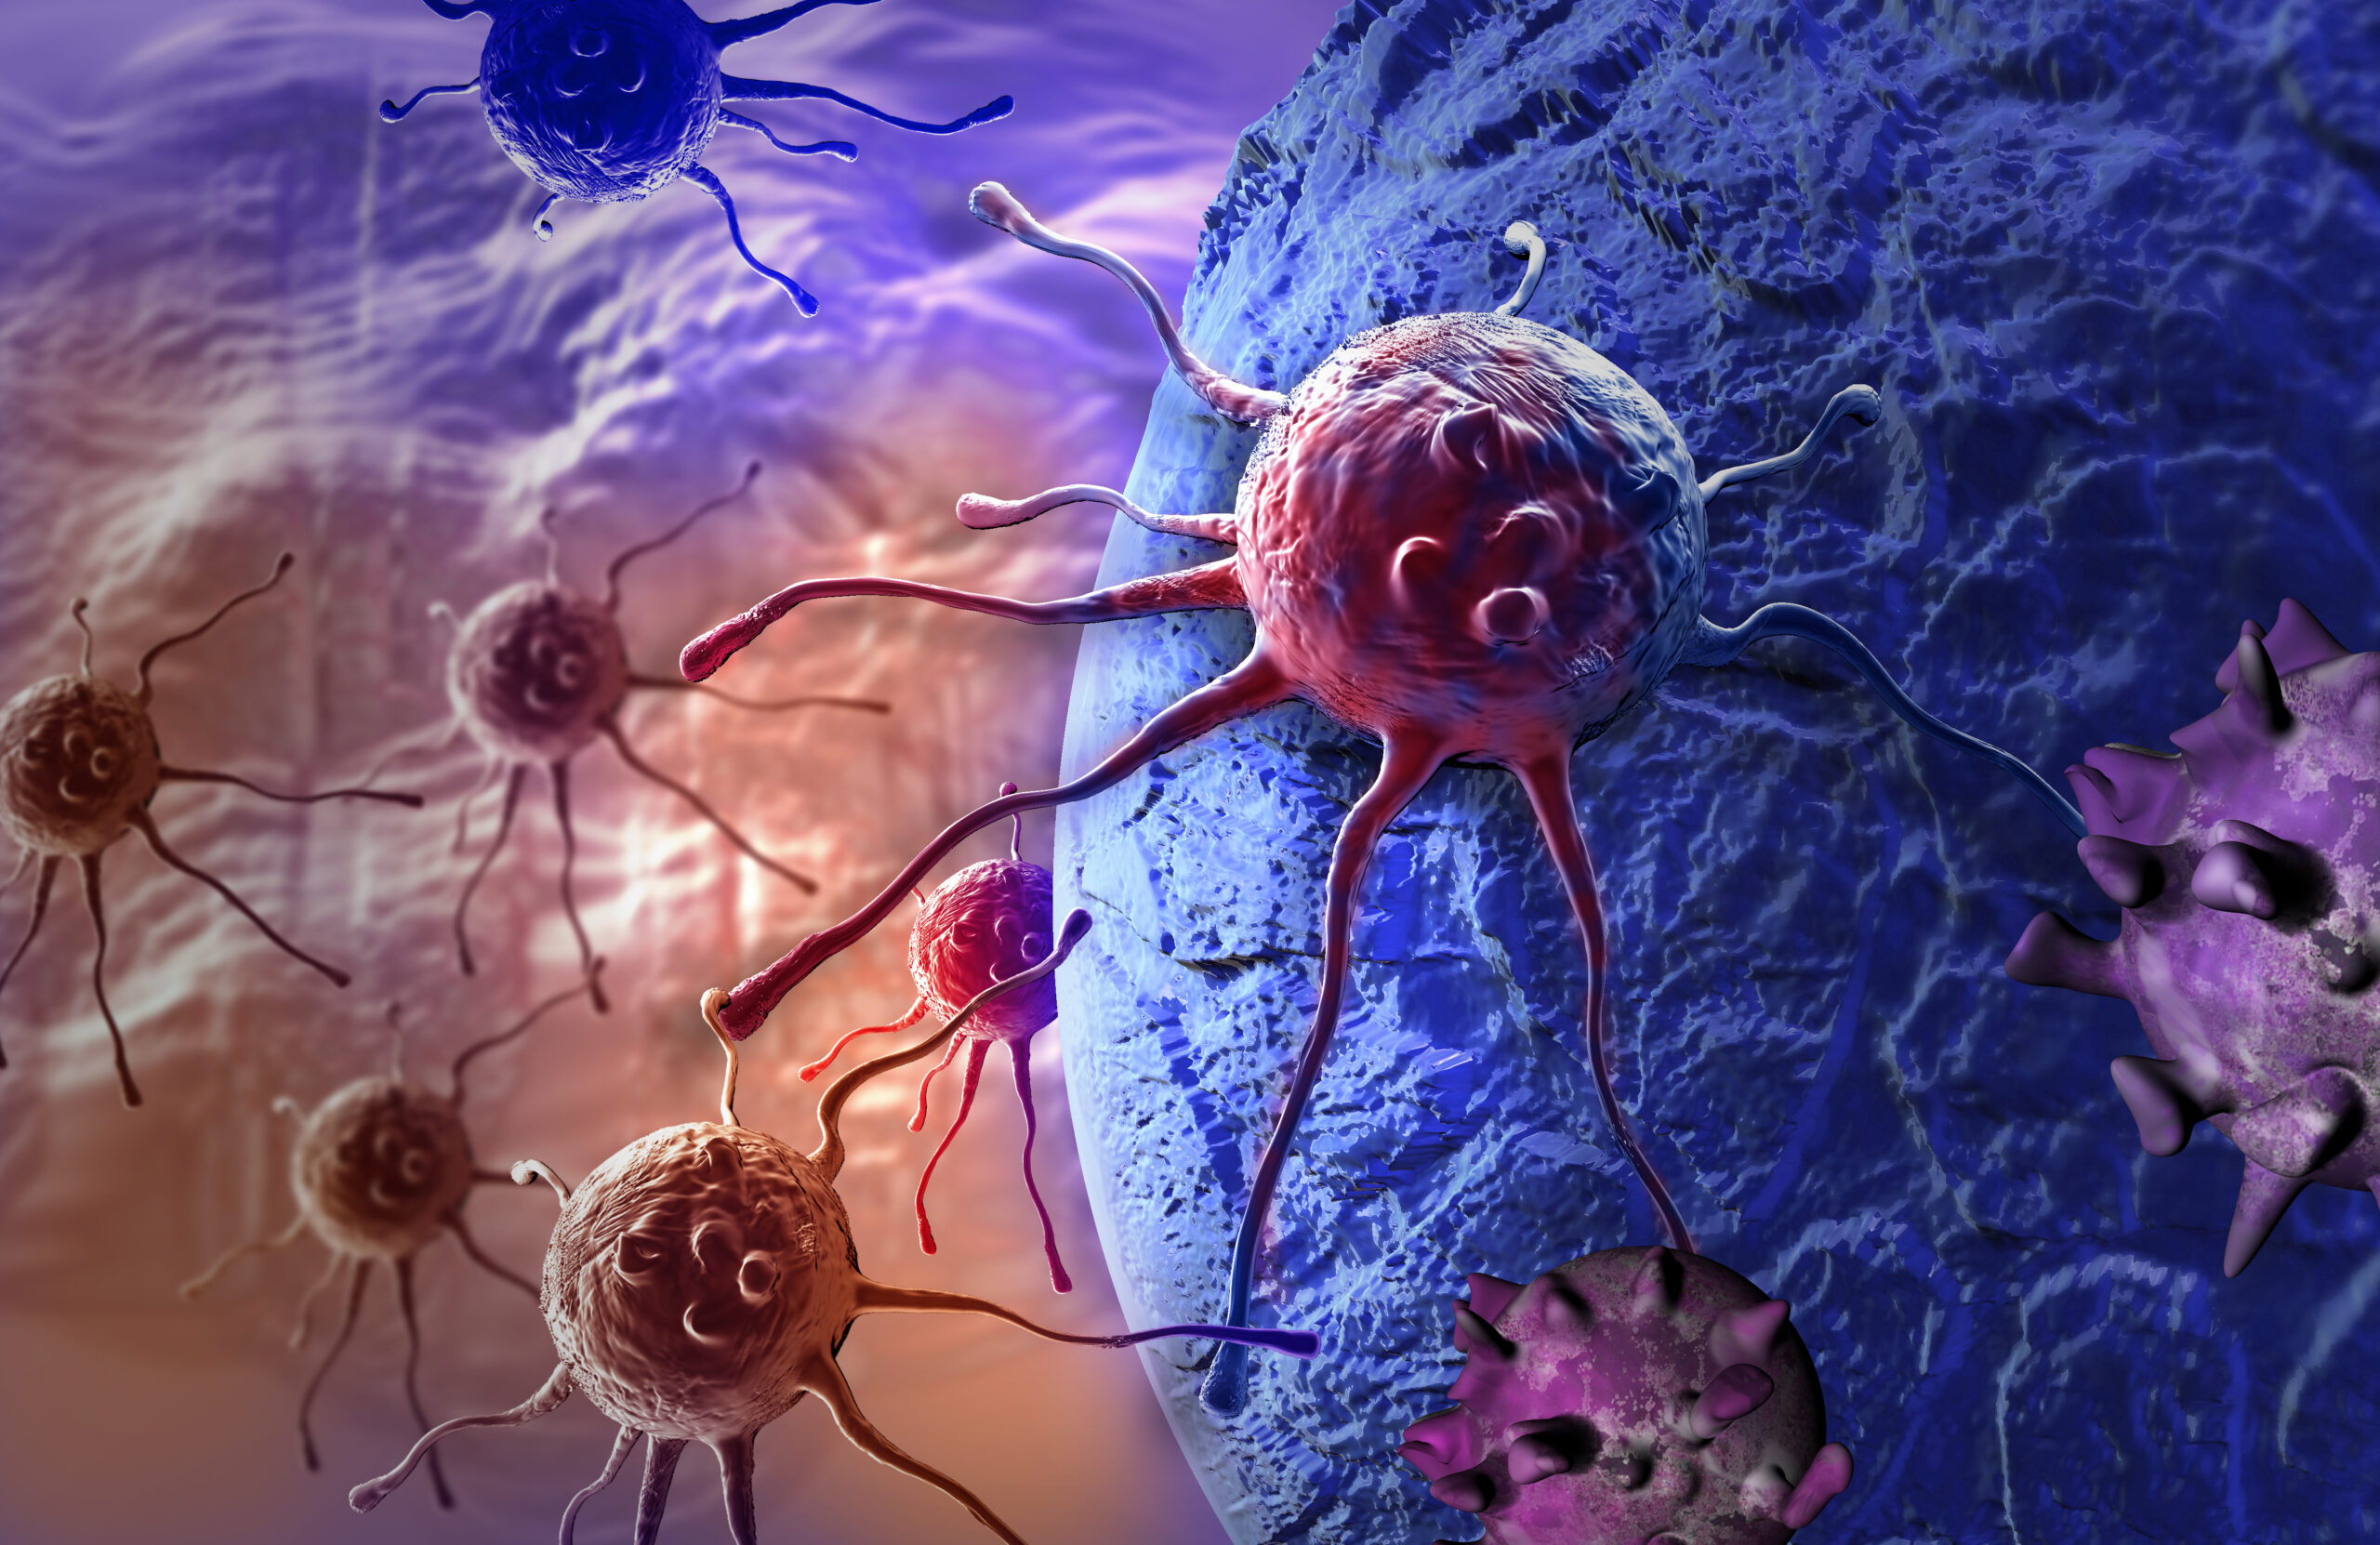 Tafinlar + Mekinist: The First Tumor-Agnostic Indication for Solid Tumors